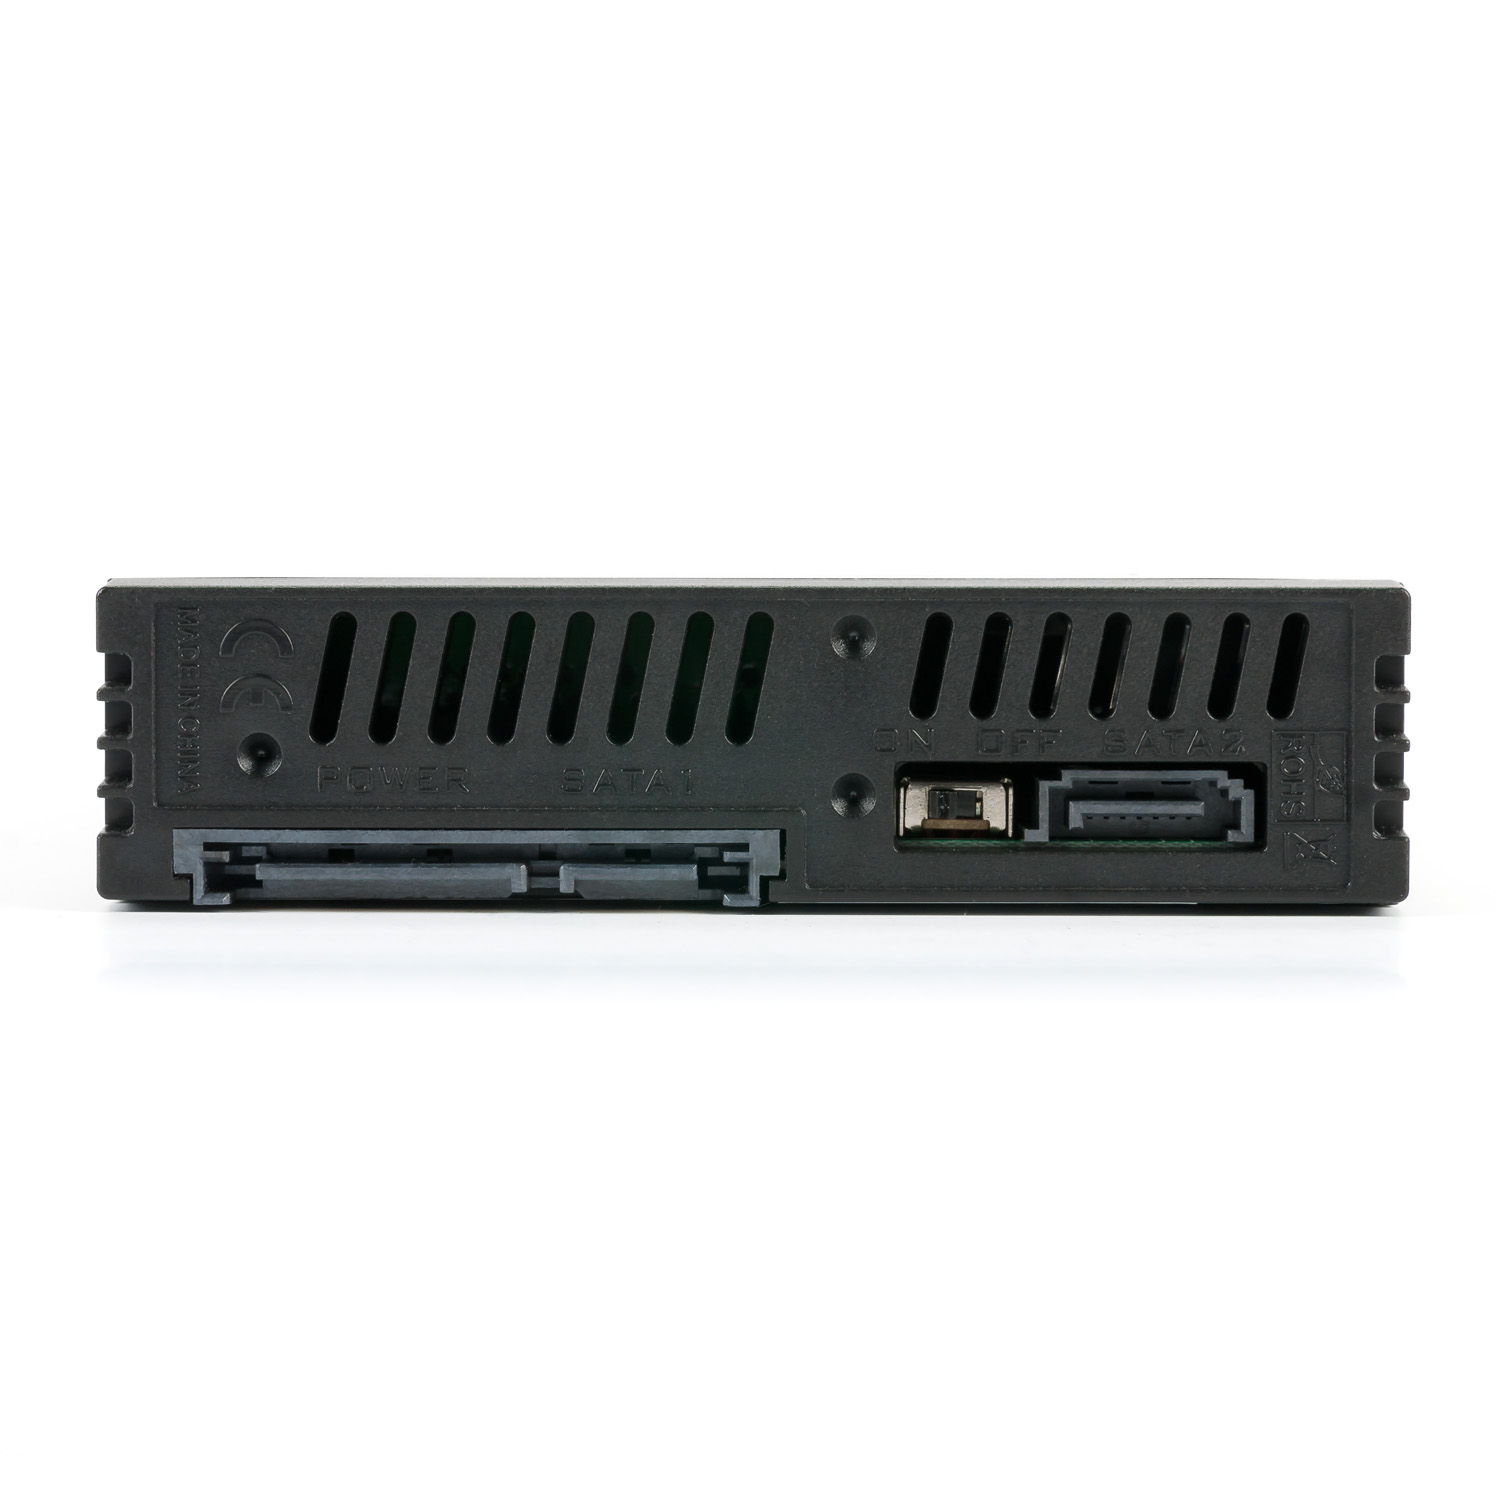 Fantec MR-25DUAL 2,5Zoll SATA + SAS HDD/SSD Wechselrahmen schwarz fuer 6,4cm 2,5Zoll HDD oder SSD in einem 8,9cm 3,5Zoll Einschub